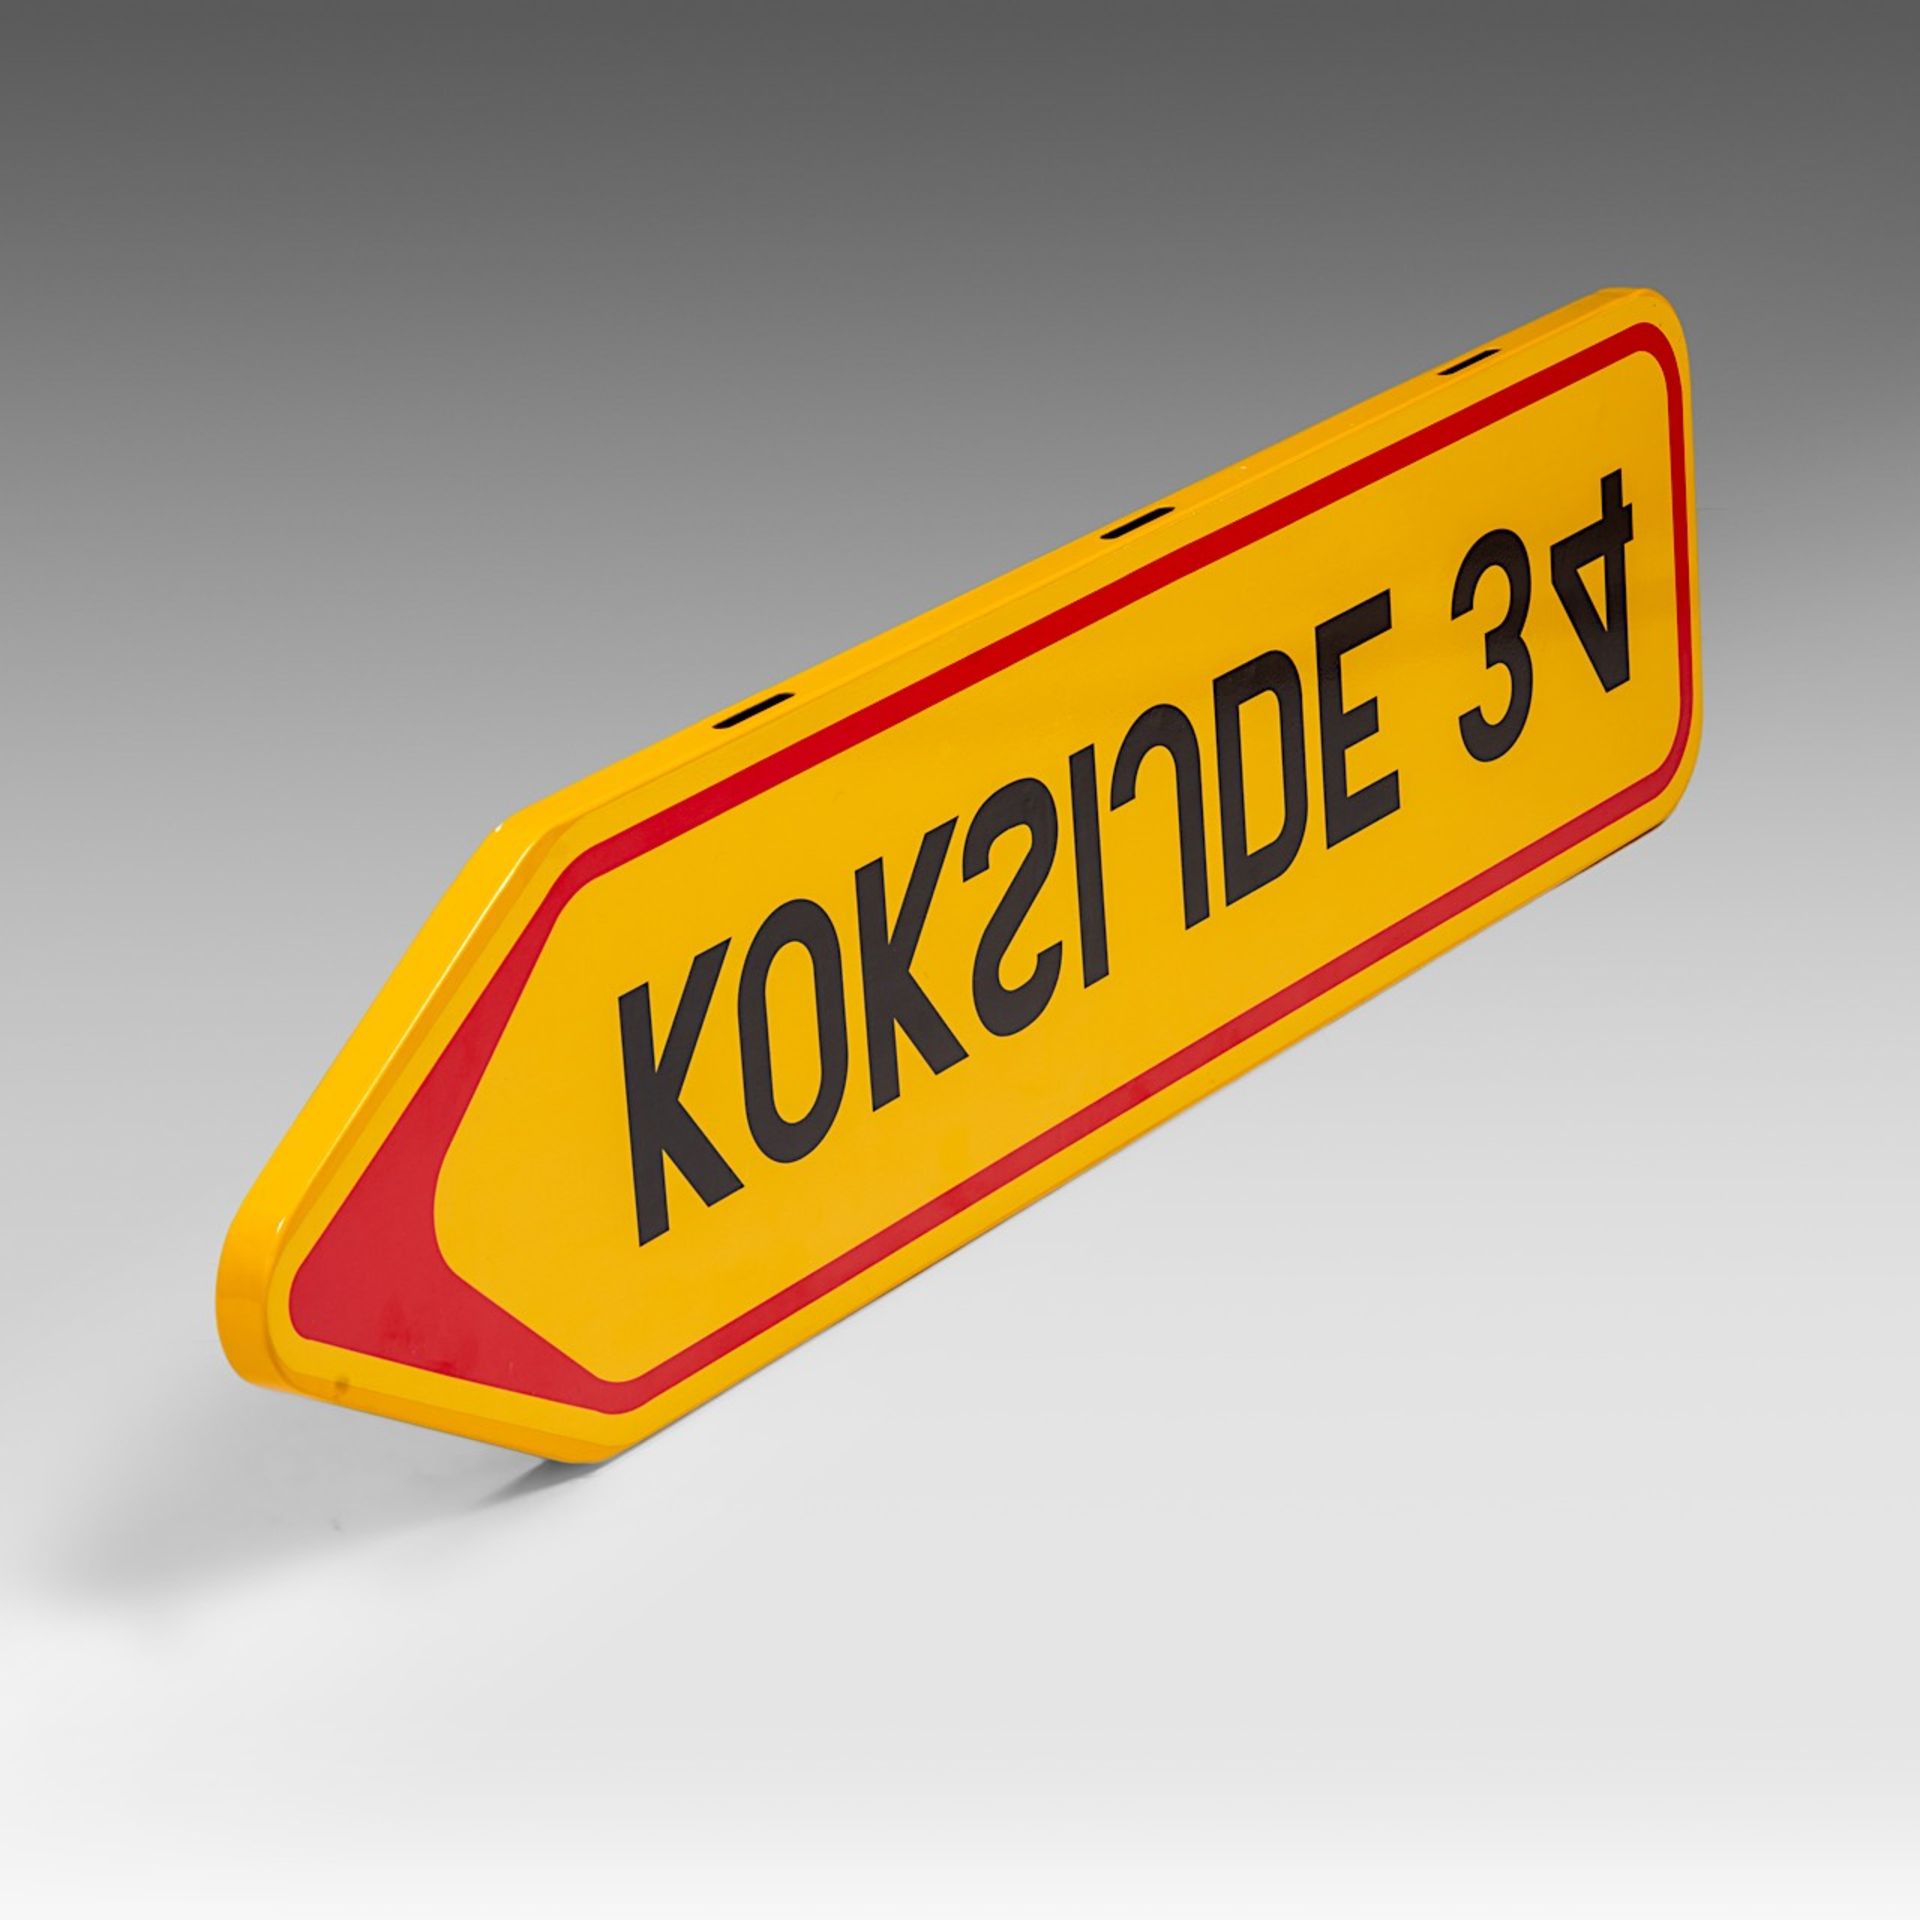 Joseph Willaert (1936-2014), 'Koksijde 34', 2006, road sign - Image 4 of 5